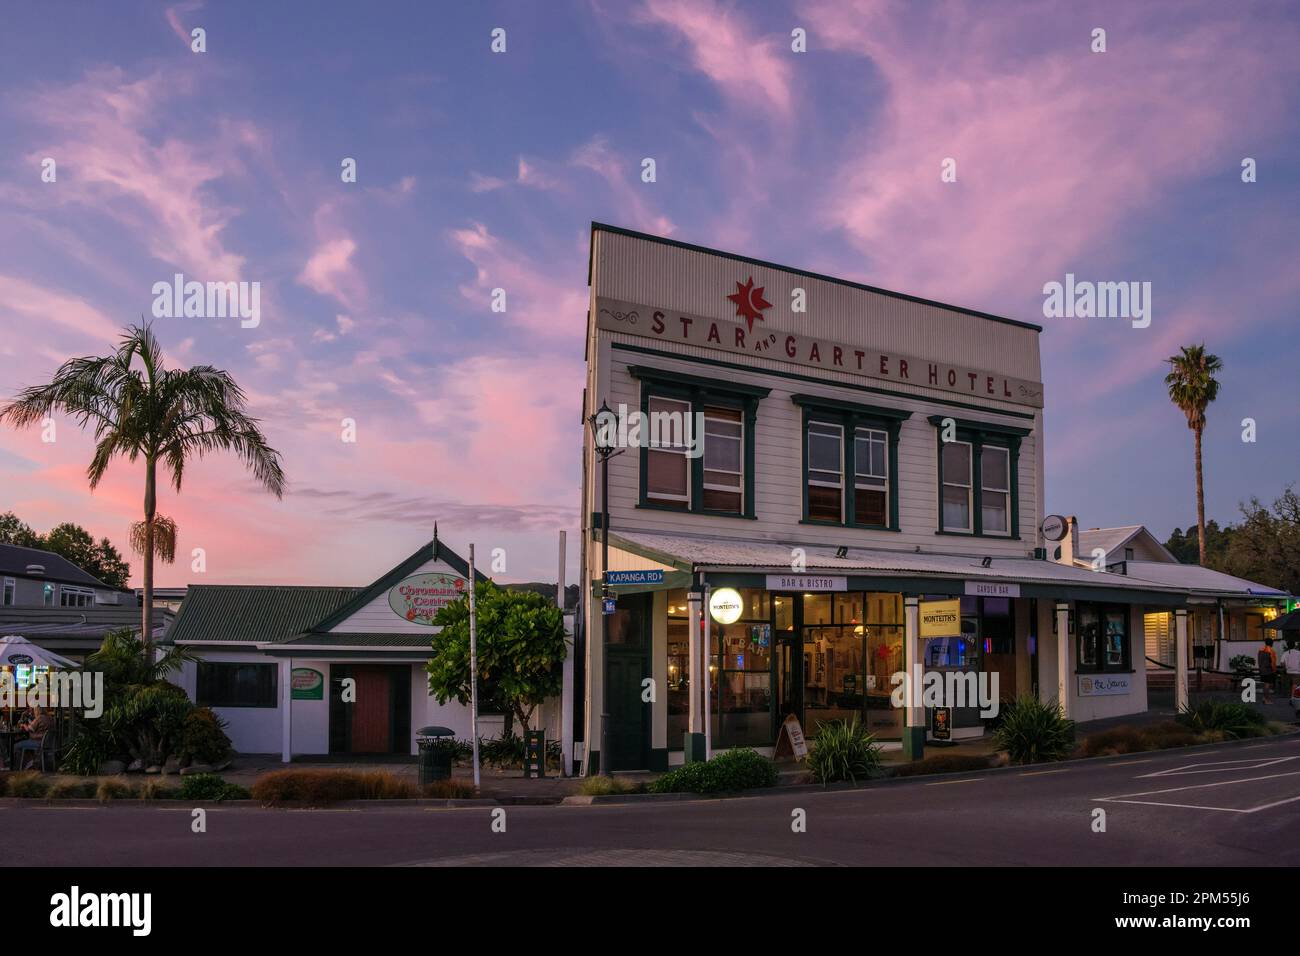 The Star and Garter Hotel at sunset, Coromandel, North Island, New Zealand Stock Photo